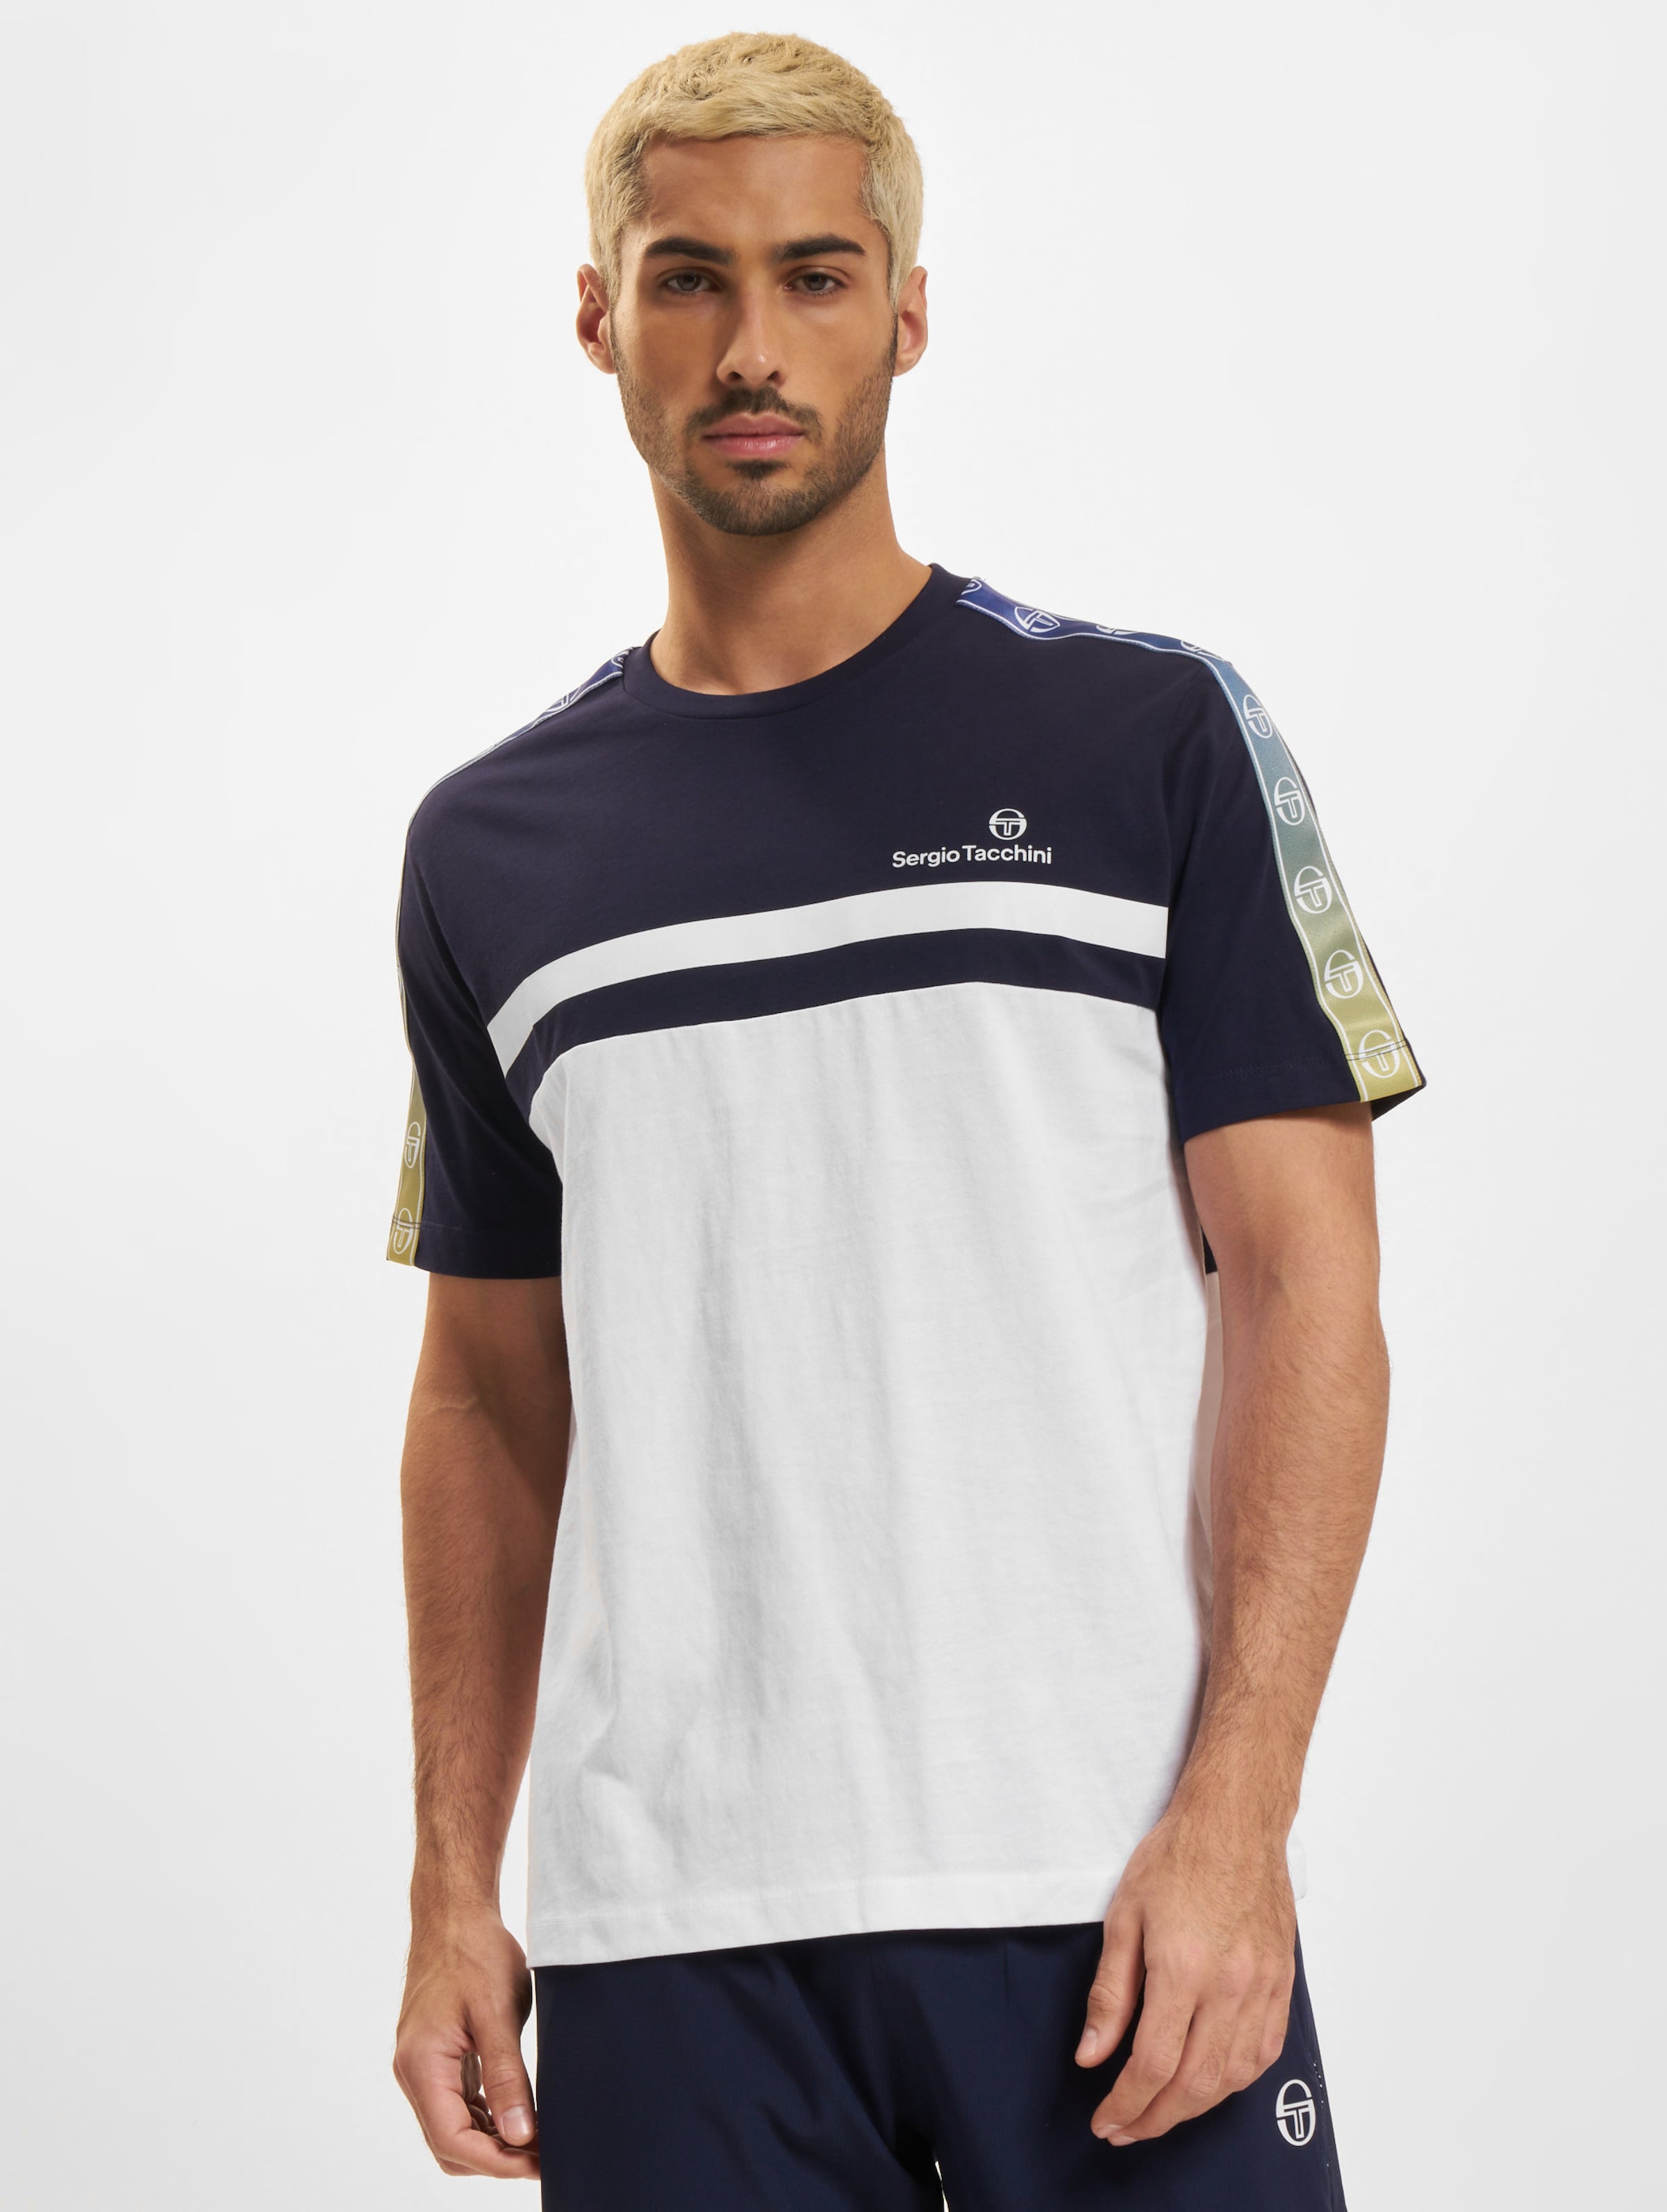 Sergio Tacchini Gradiente Co T-Shirt Mannen op kleur wit, Maat 3XL